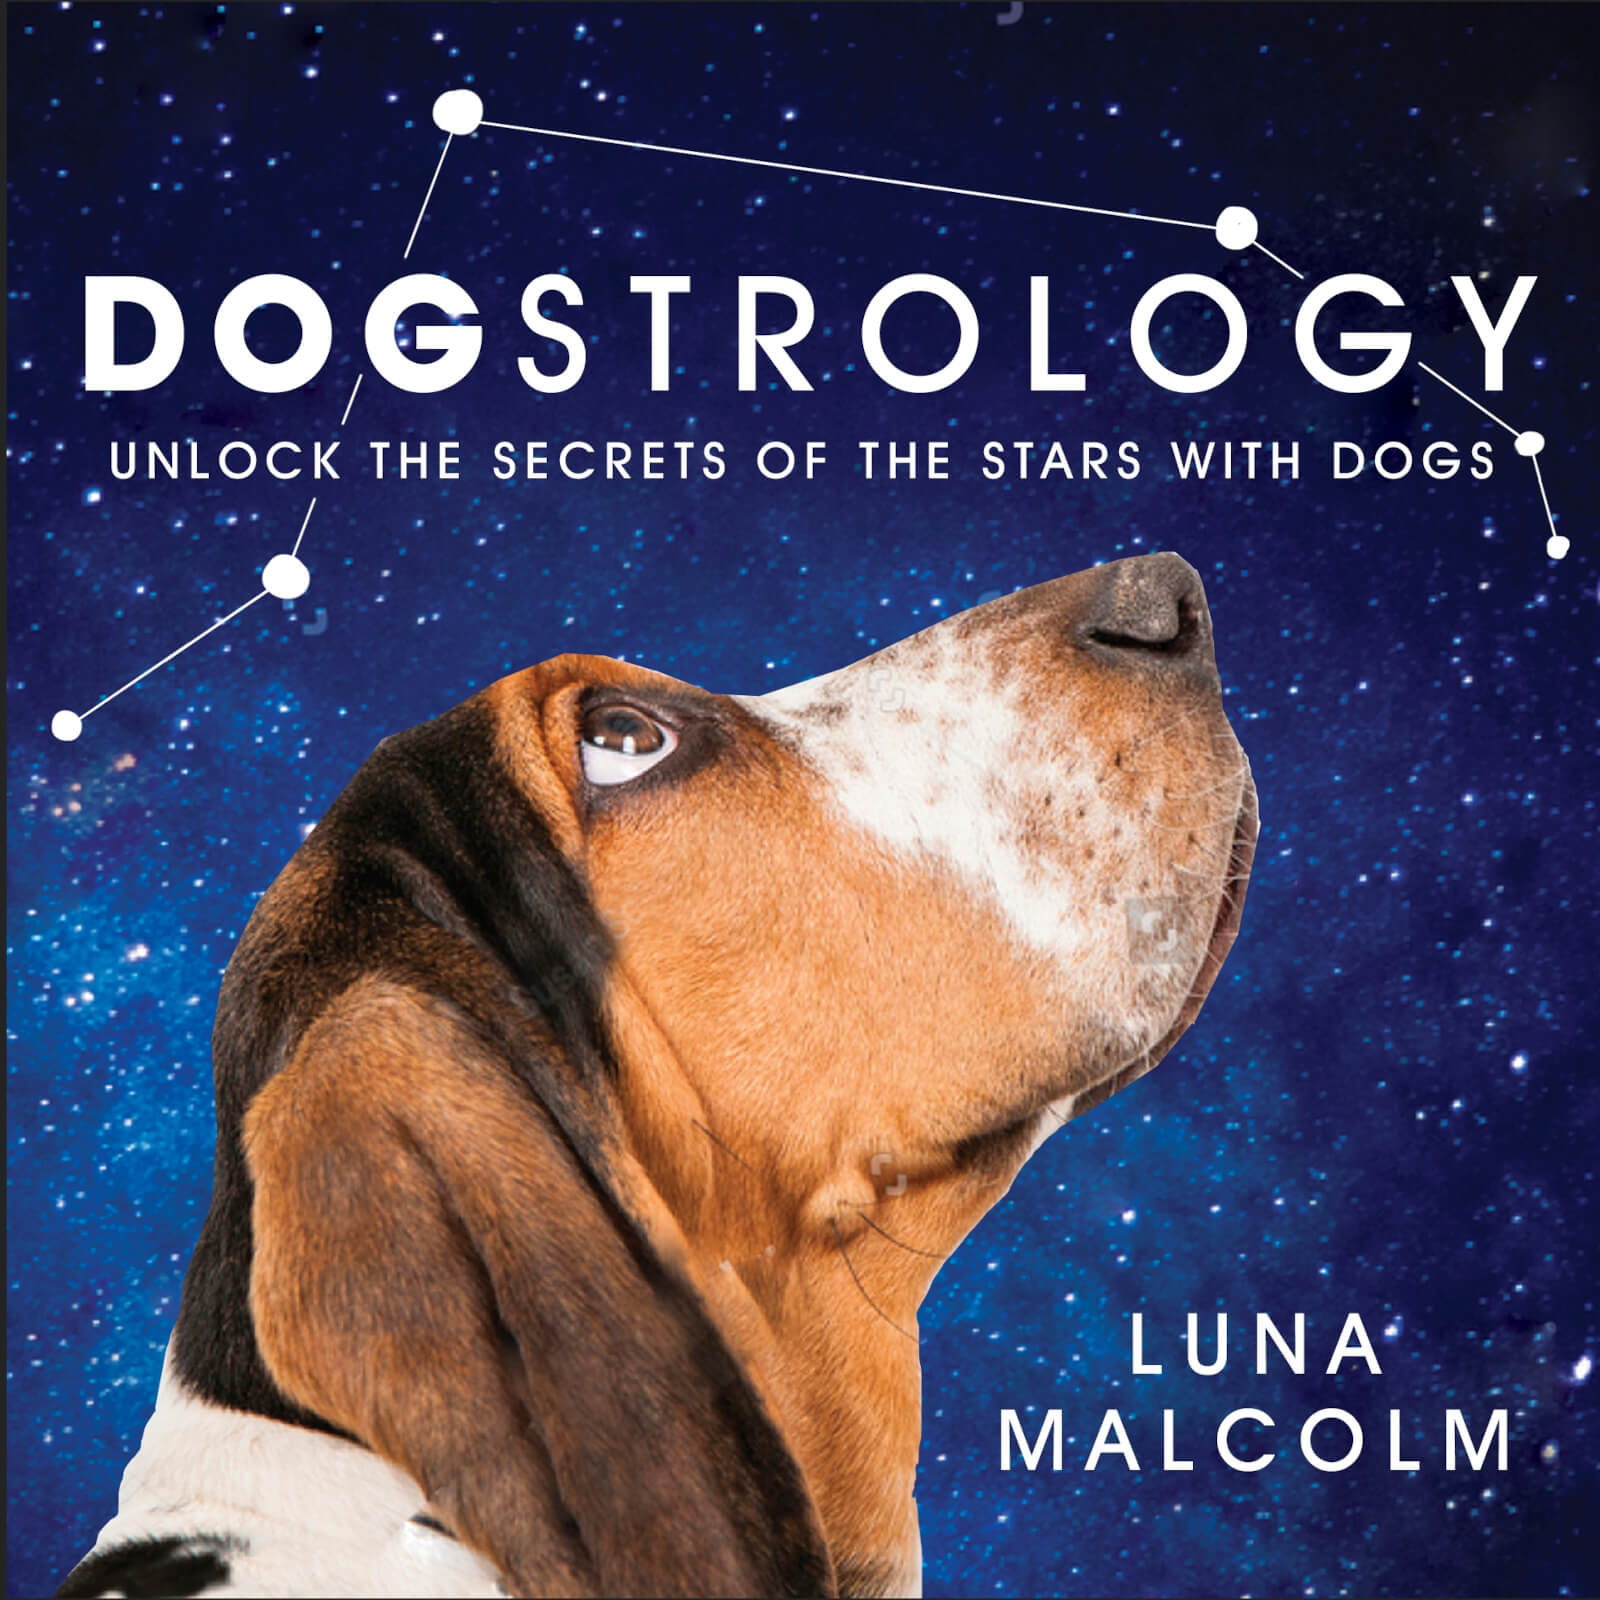 Dogstrology Book